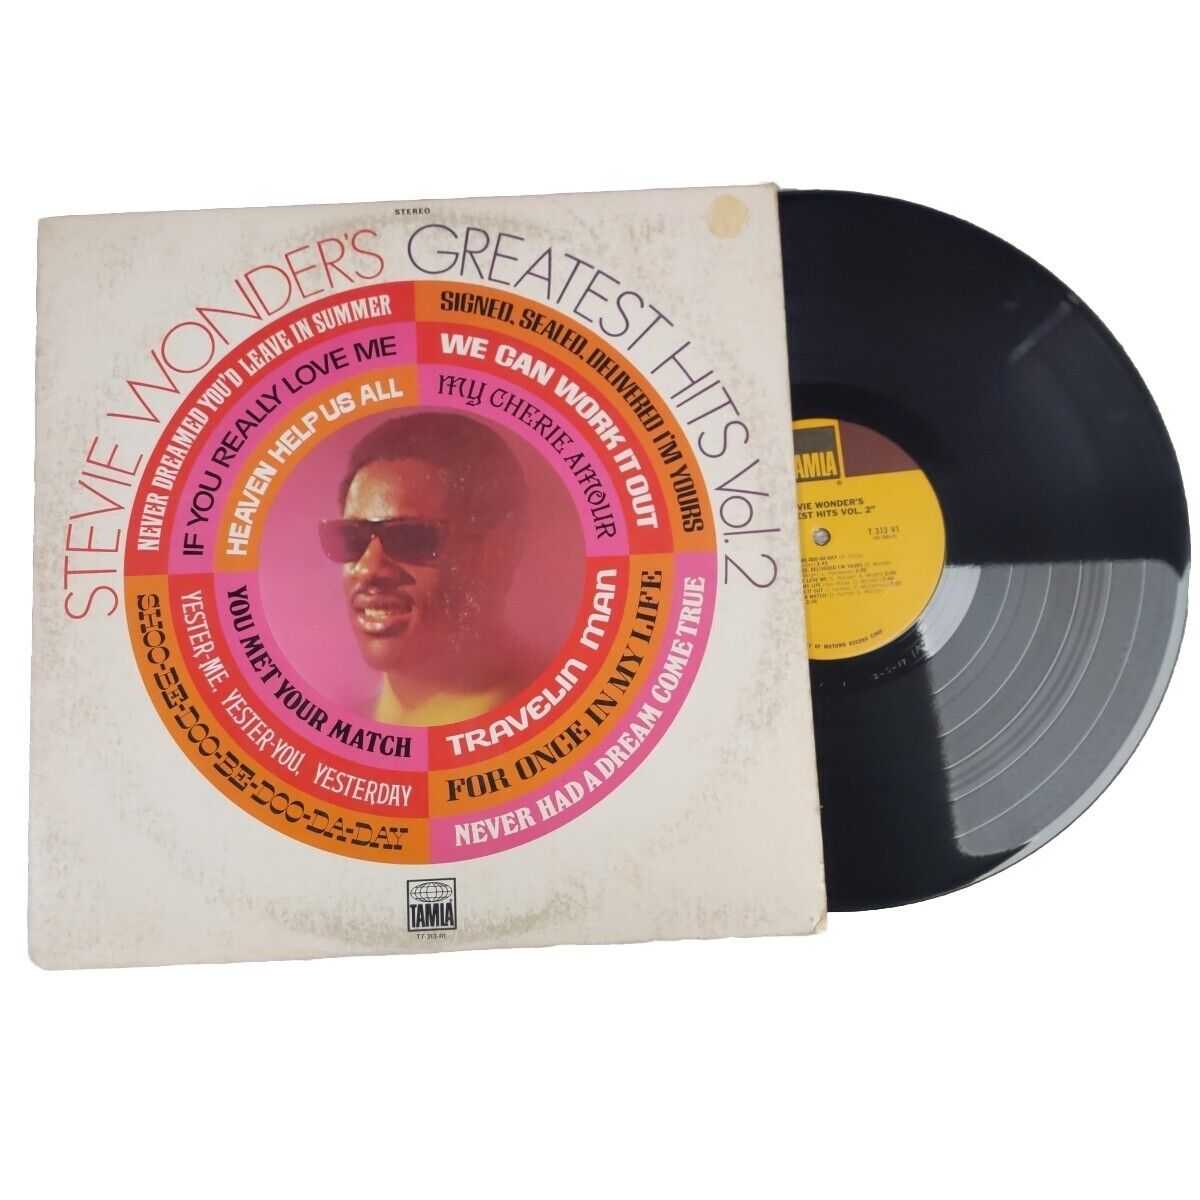 Stevie Wonder's Greatest Hits Vol. 2 Vinyl Record 1970s Soul Funk T 313 V1